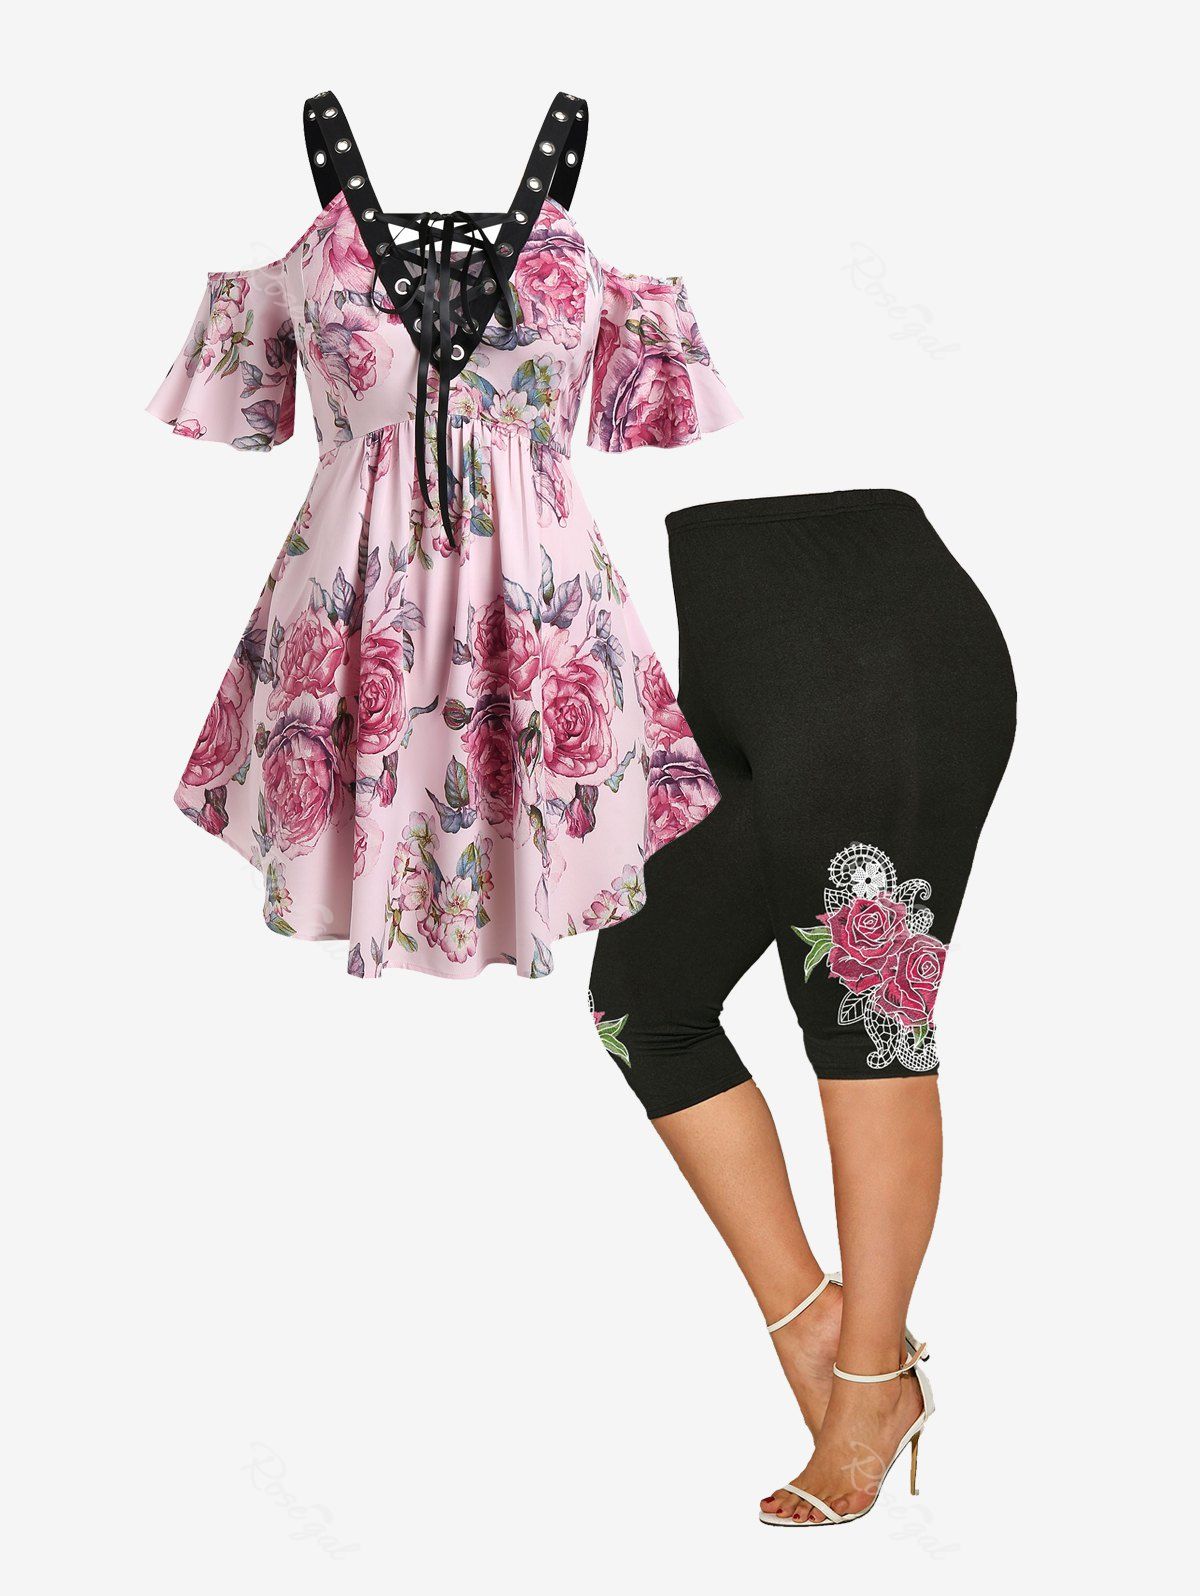 Discount Flower Grommet Lace Up Cold Shoulder Blouse and Rose Print High Waist Capri Leggings Plus Size Summer Outfit  